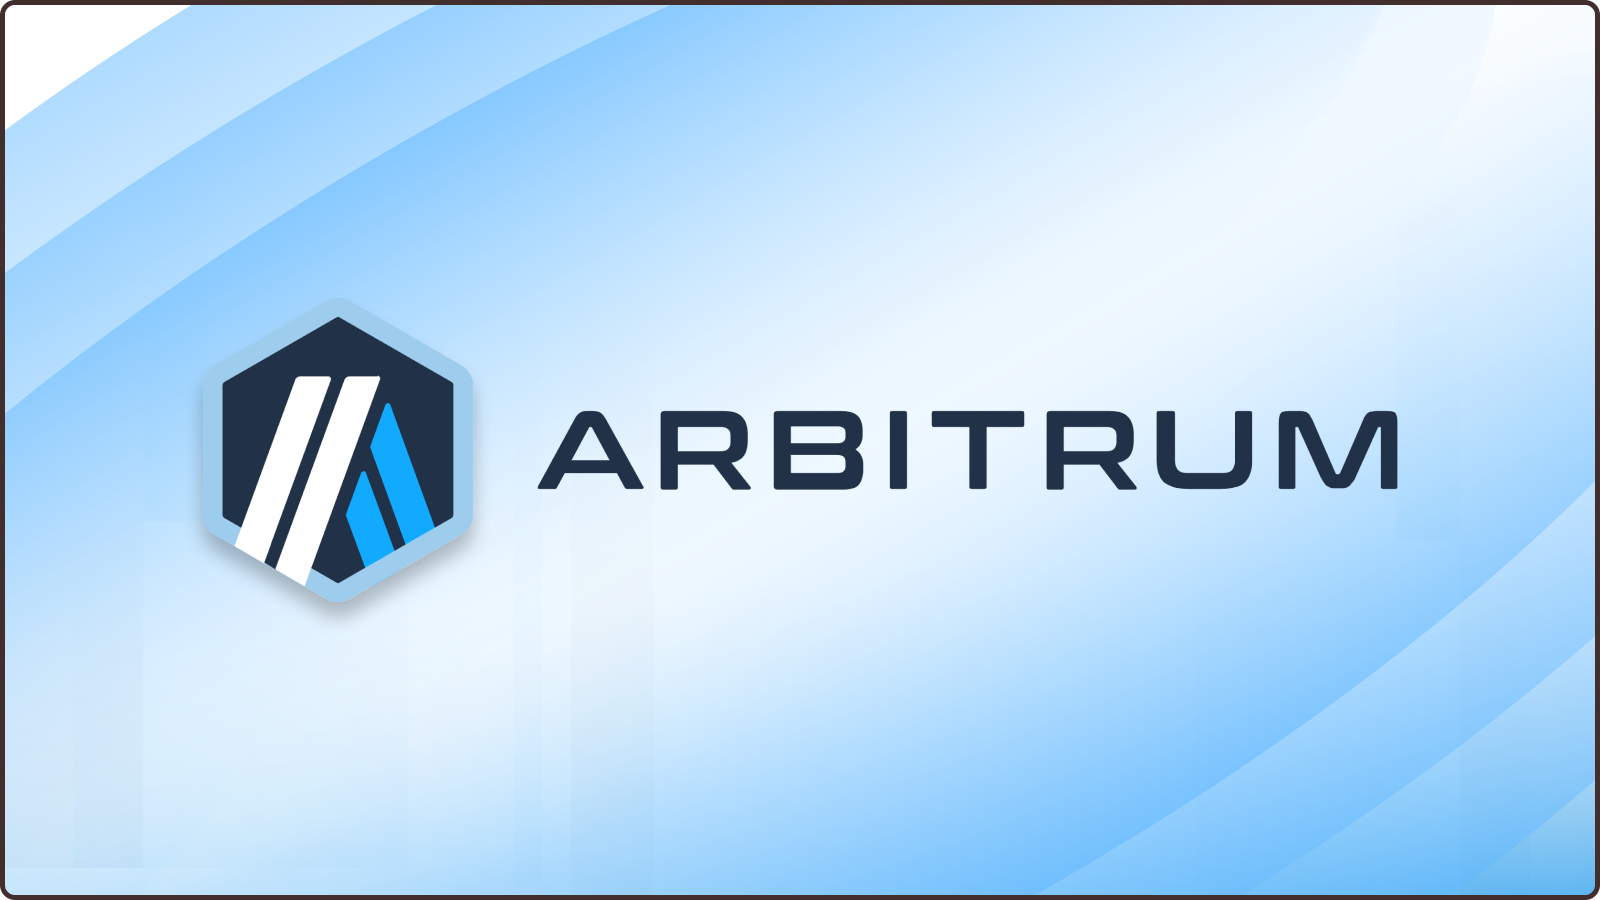 Arbitrum Network: Revolutionizing Ethereum's Layer 2